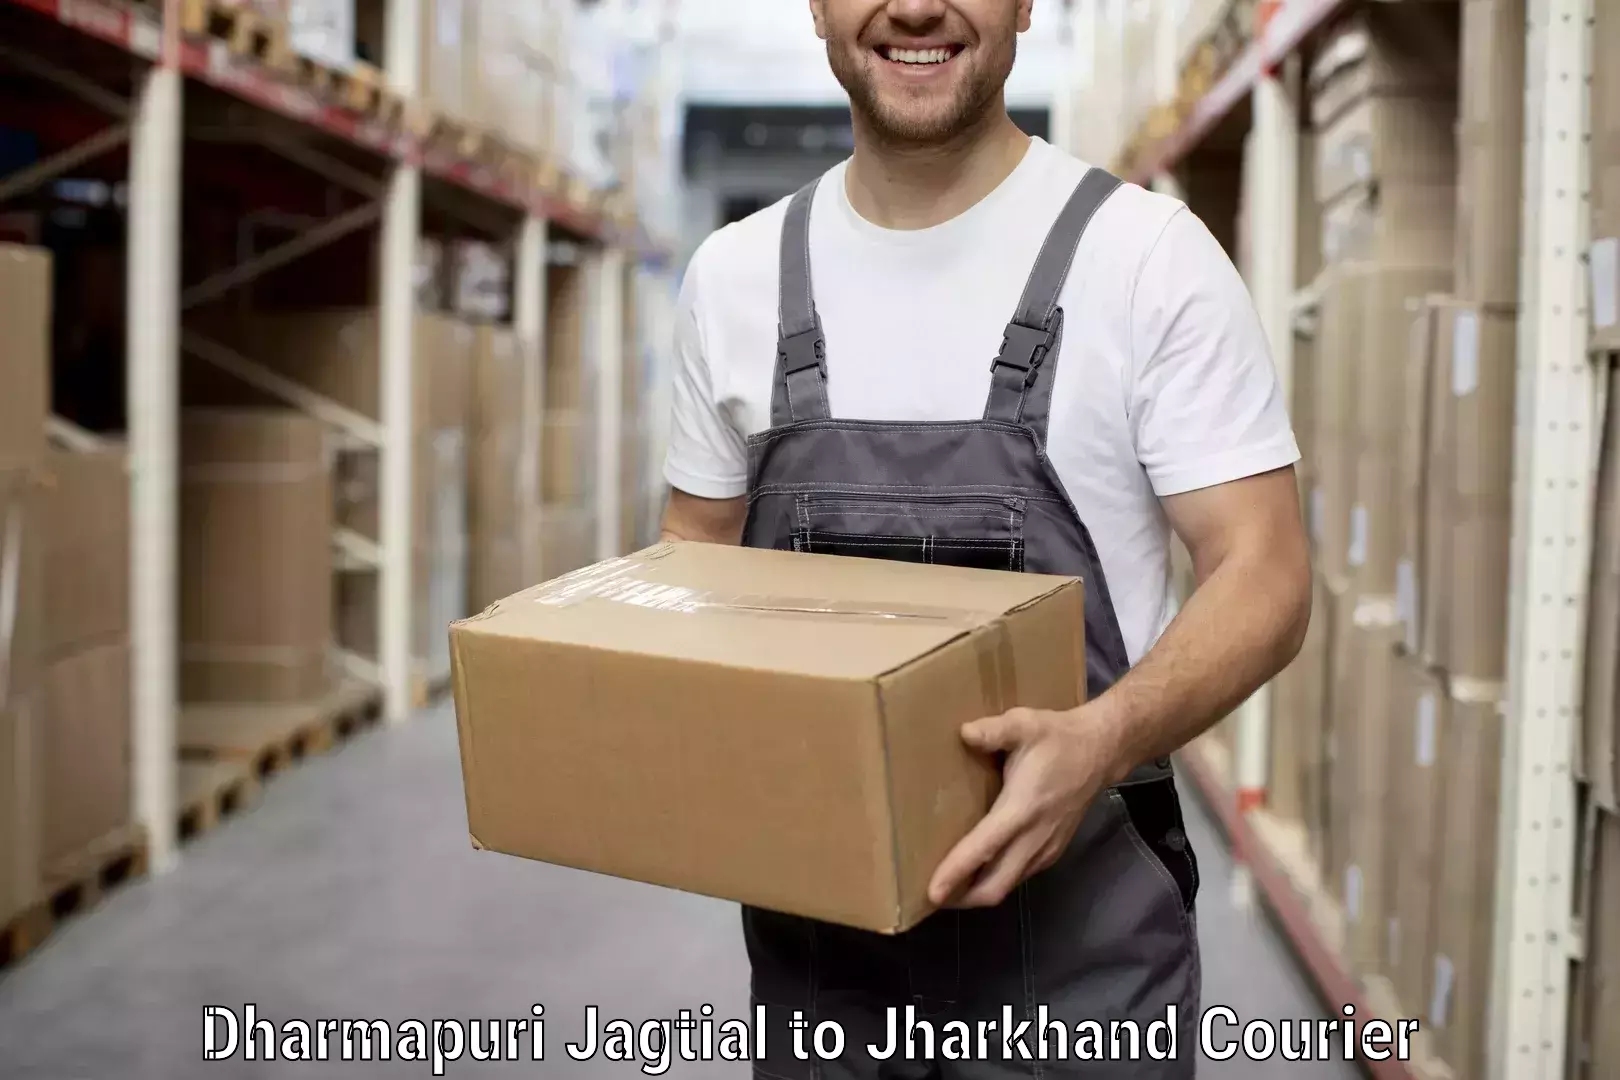 Reliable relocation services Dharmapuri Jagtial to Jamshedpur